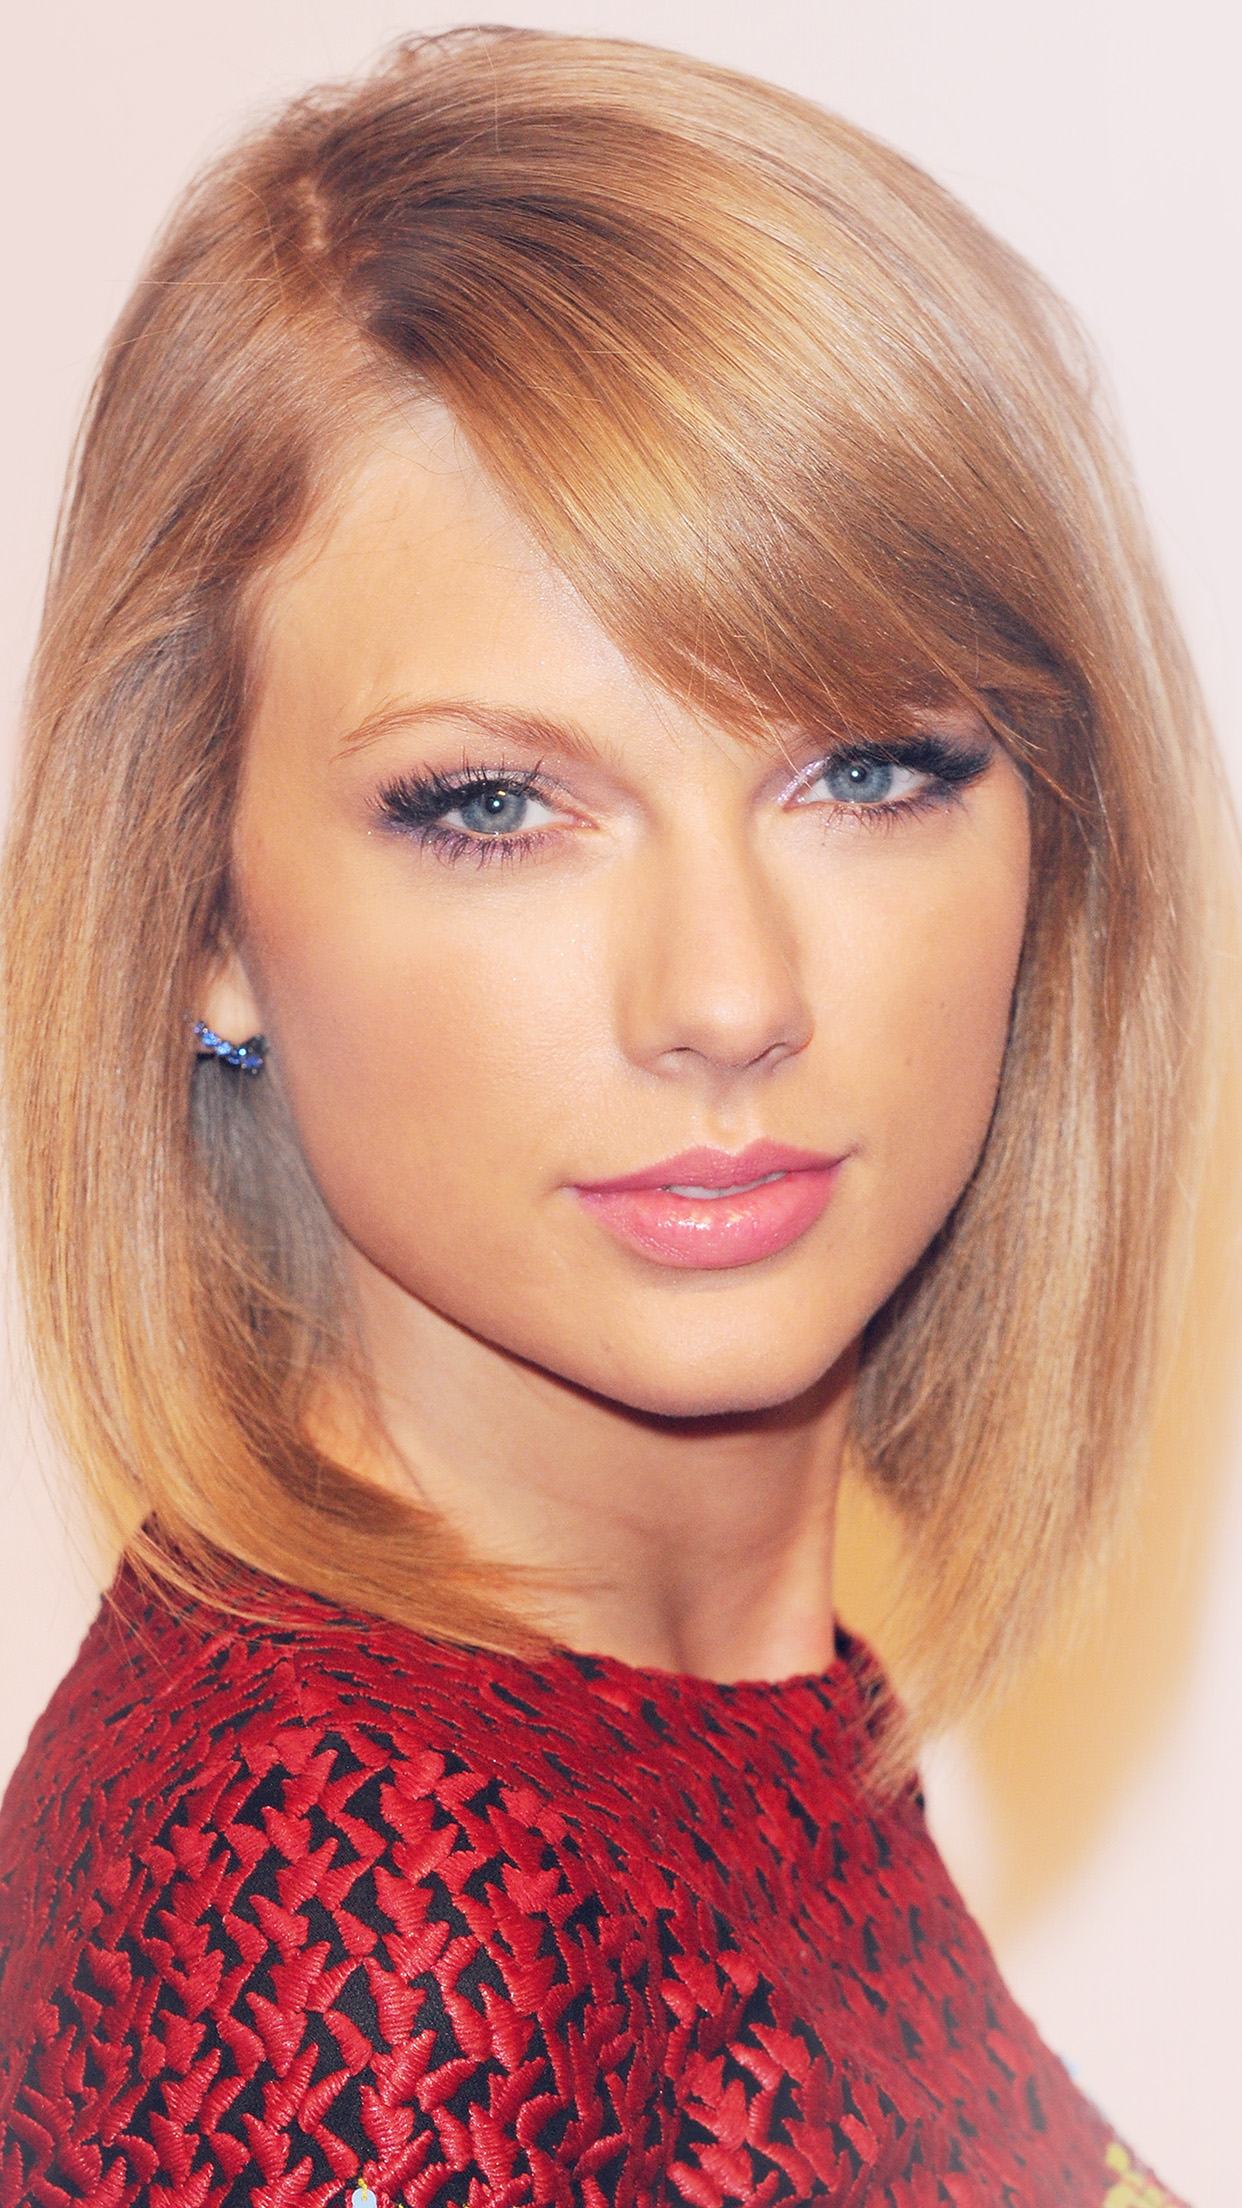 Taylor Swift Face Cute Beautiful Singer Android Wallpaper Taylor Swift Face Hd Wallpaper Backgrounds Download